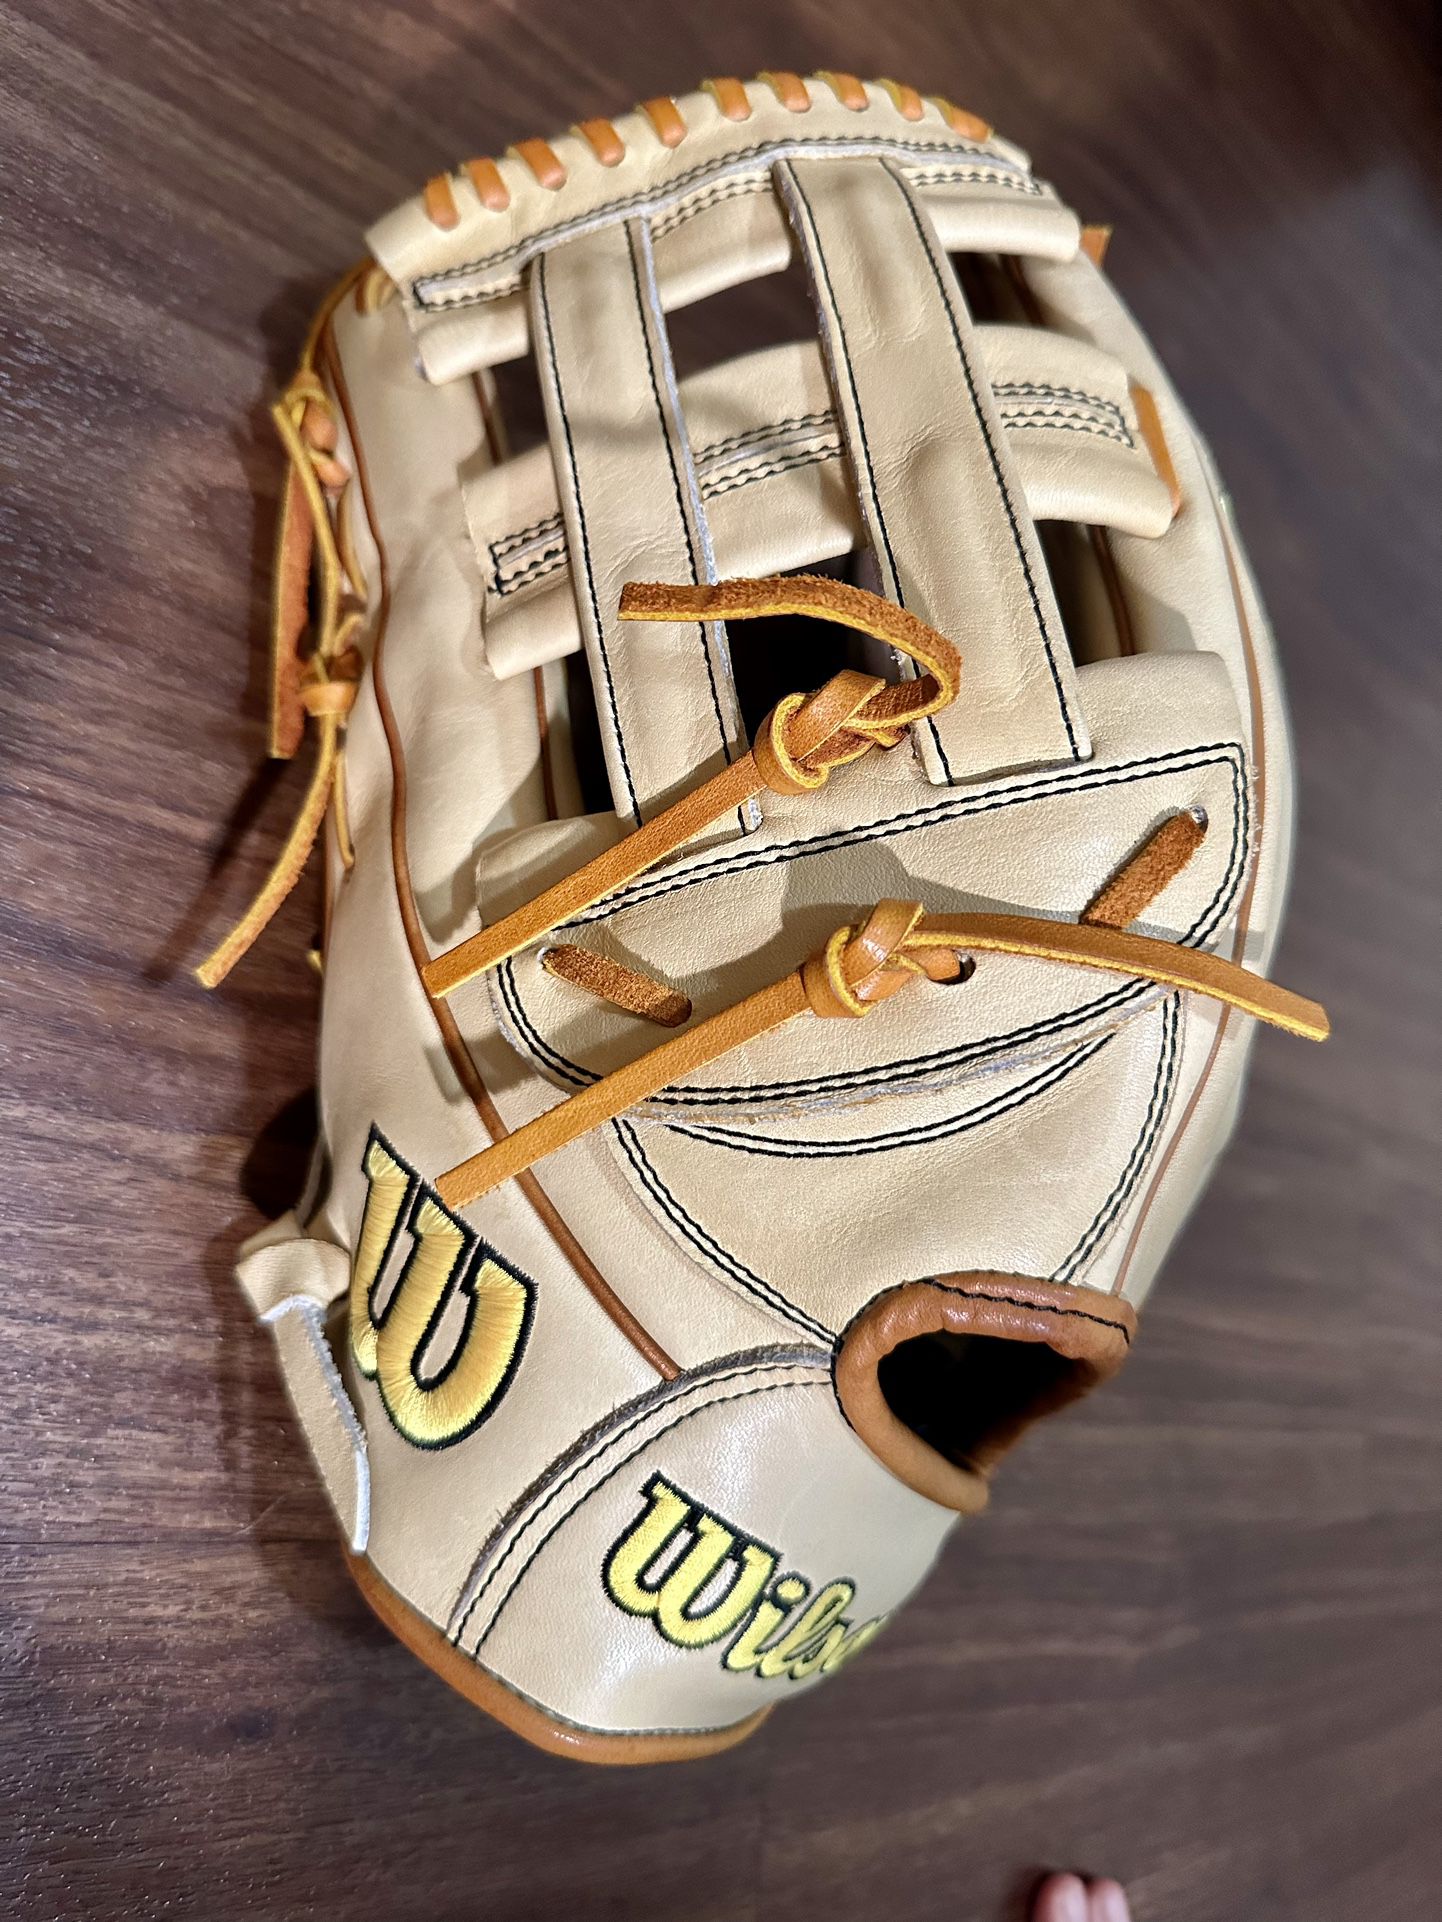 Brand New Baseball/Softball Glove 